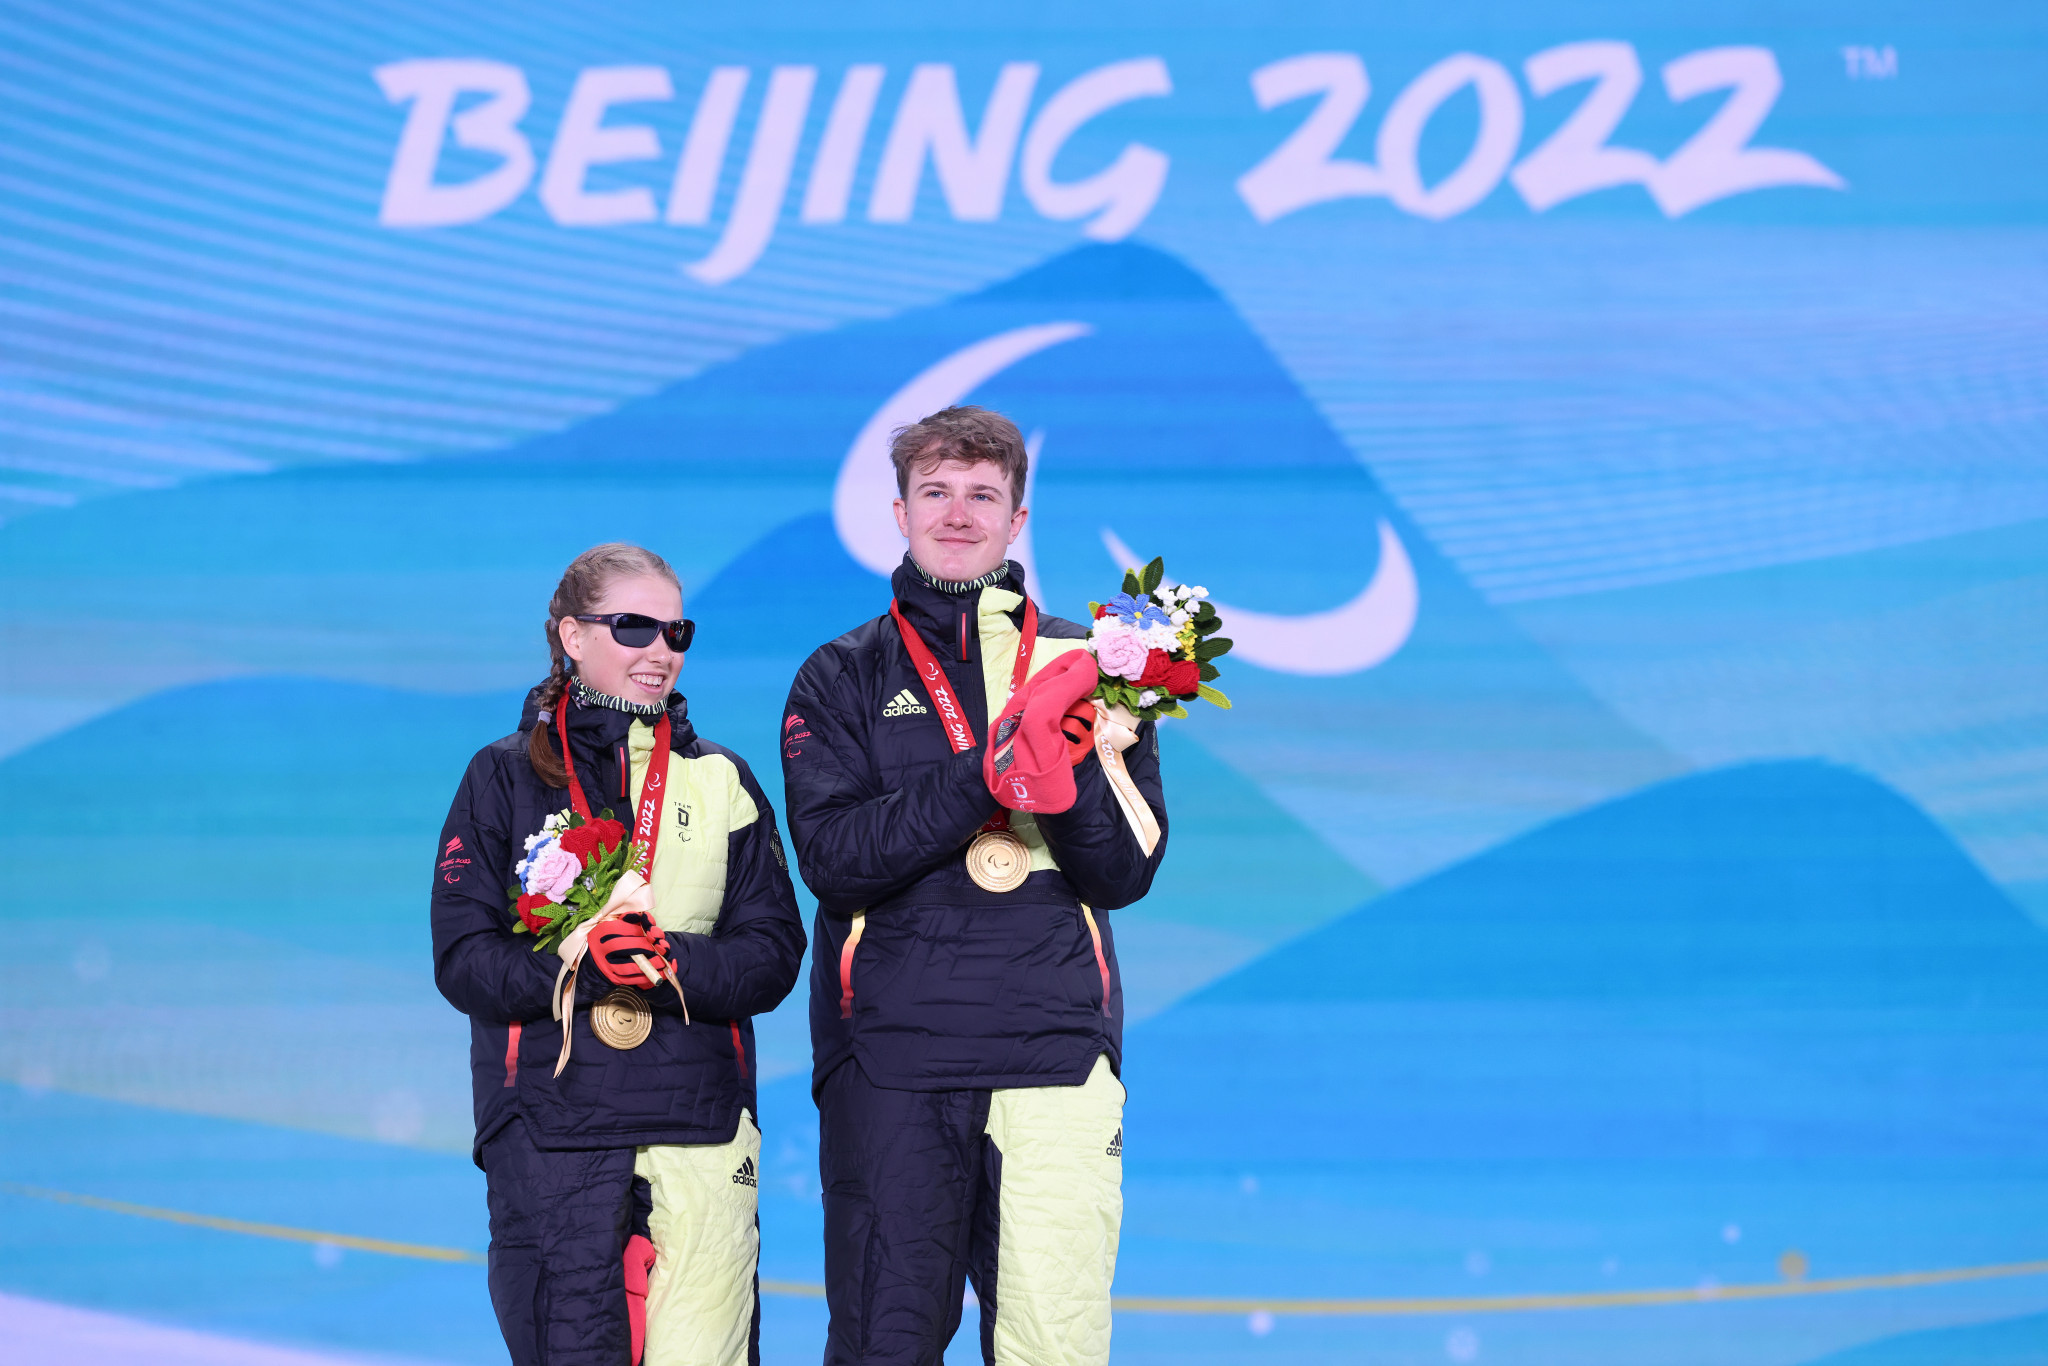 Linn Kazmaier, pictured alongside her guide Florian Baumann, won five medals at the Beijing 2022 Winter Paralympics ©Getty Images